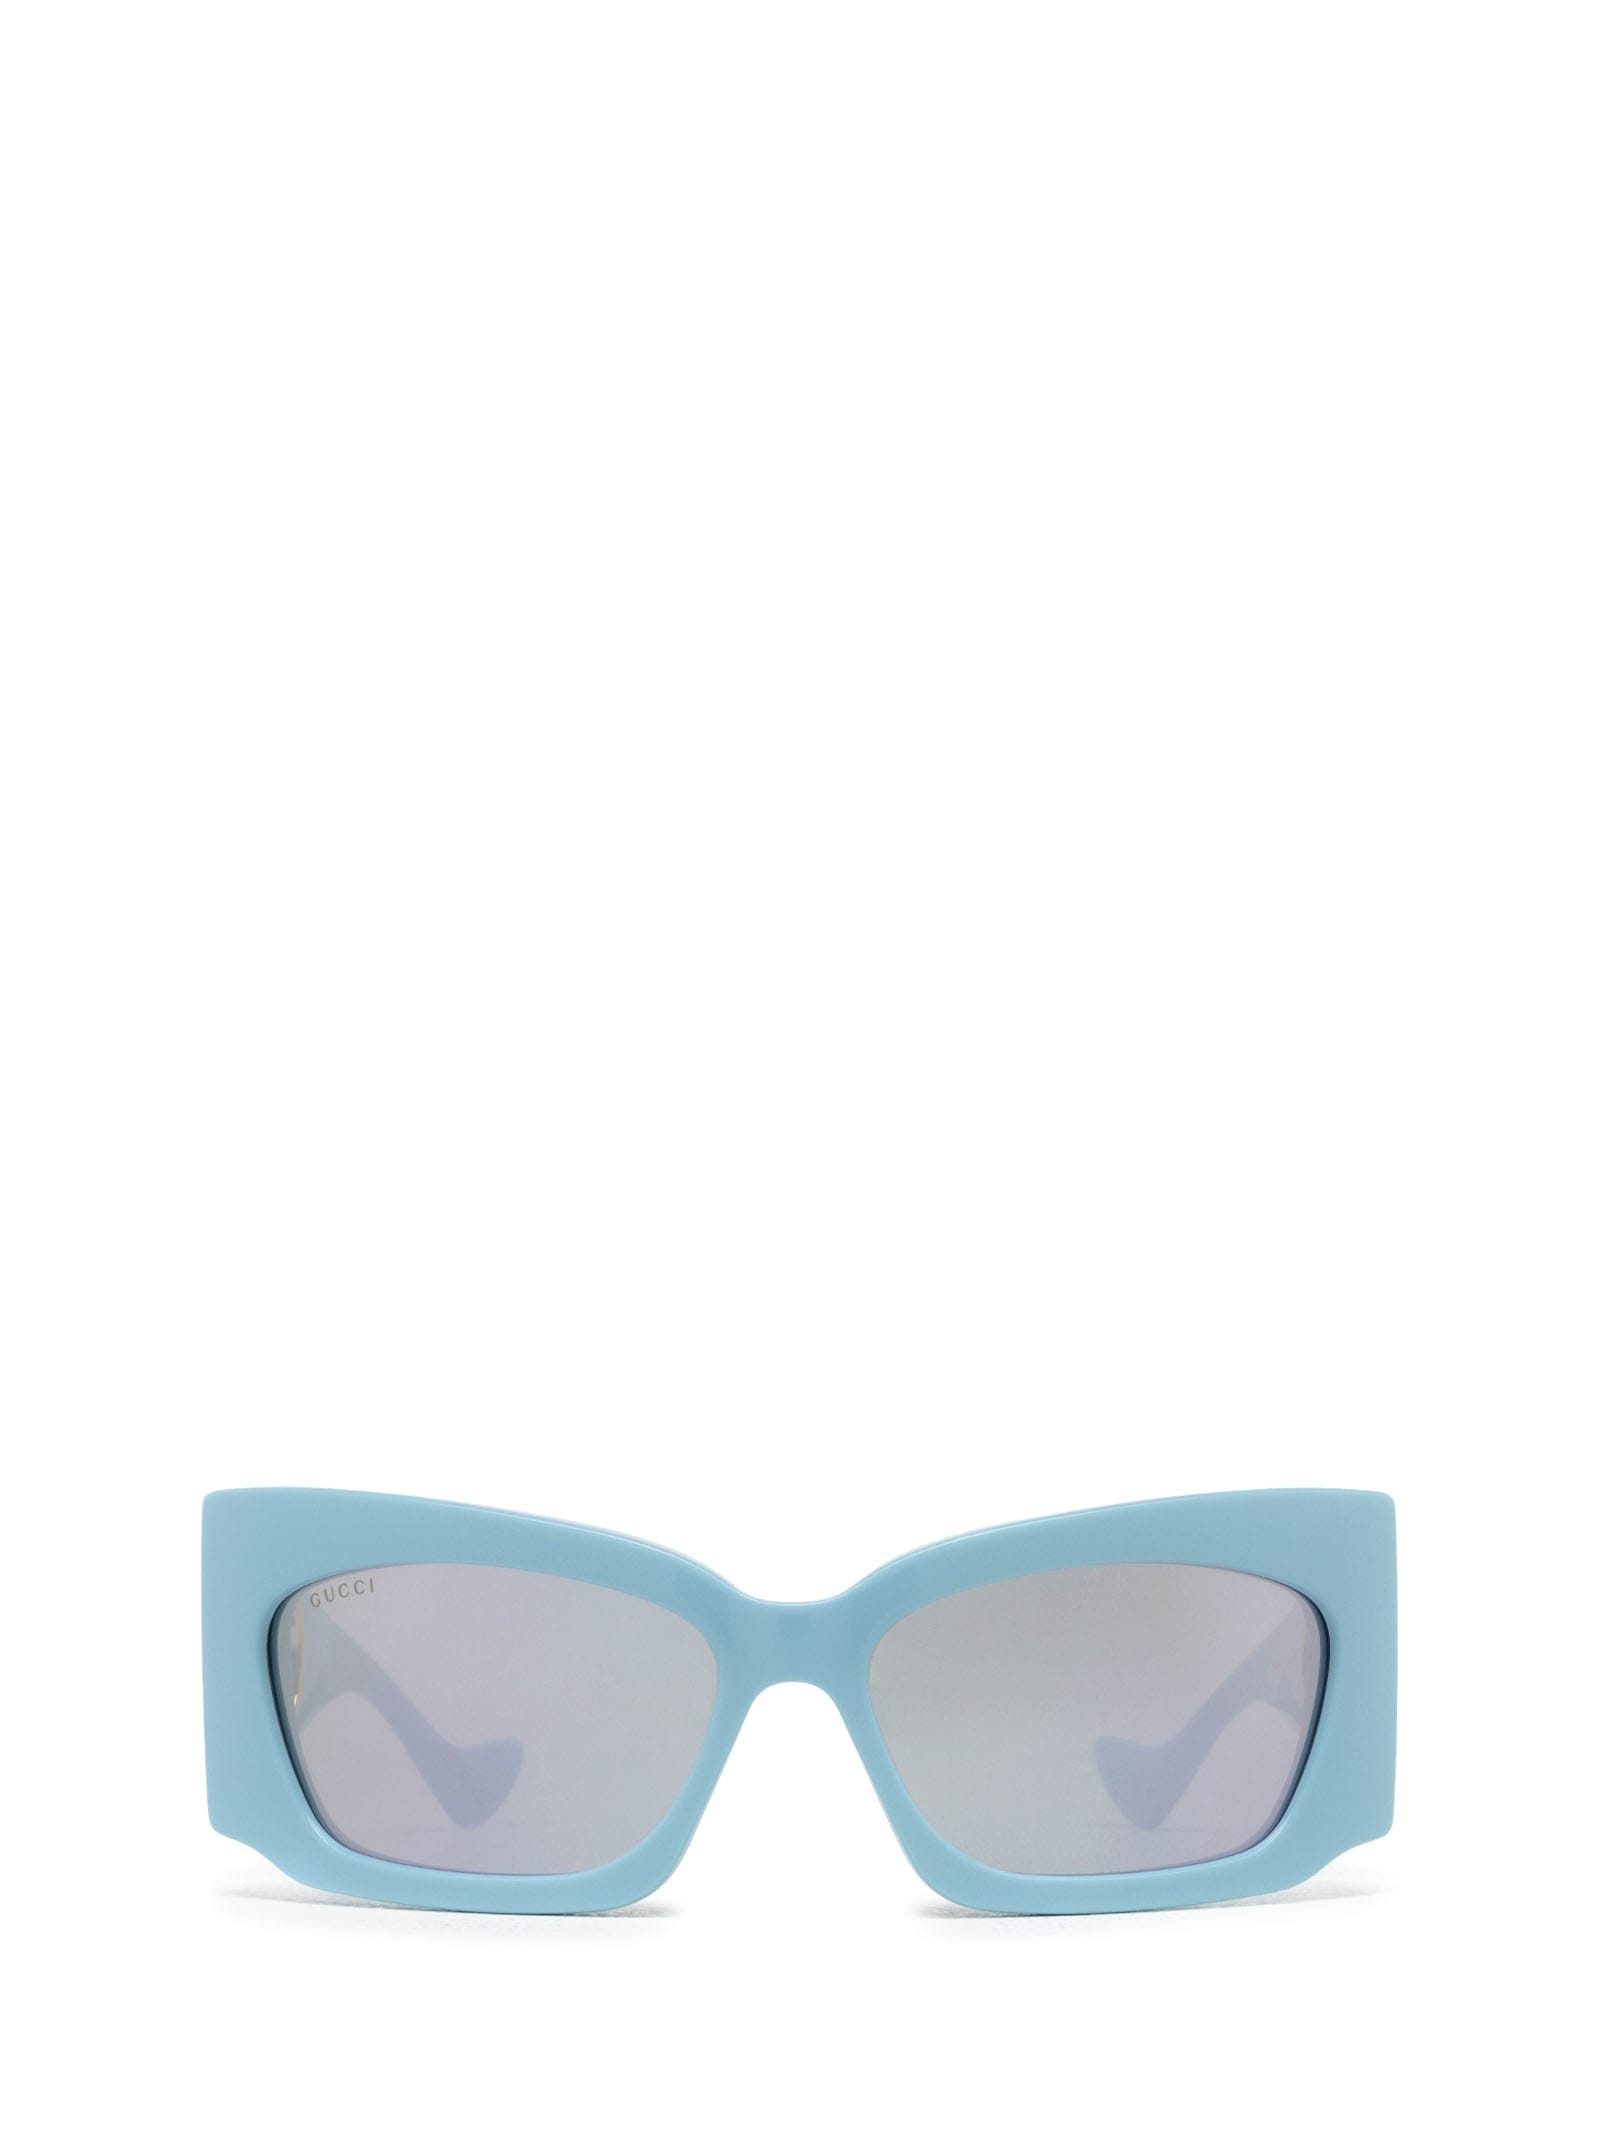 Gucci Sunglasses GG0712S 002 - Best Price and Available as Prescription  Sunglasses